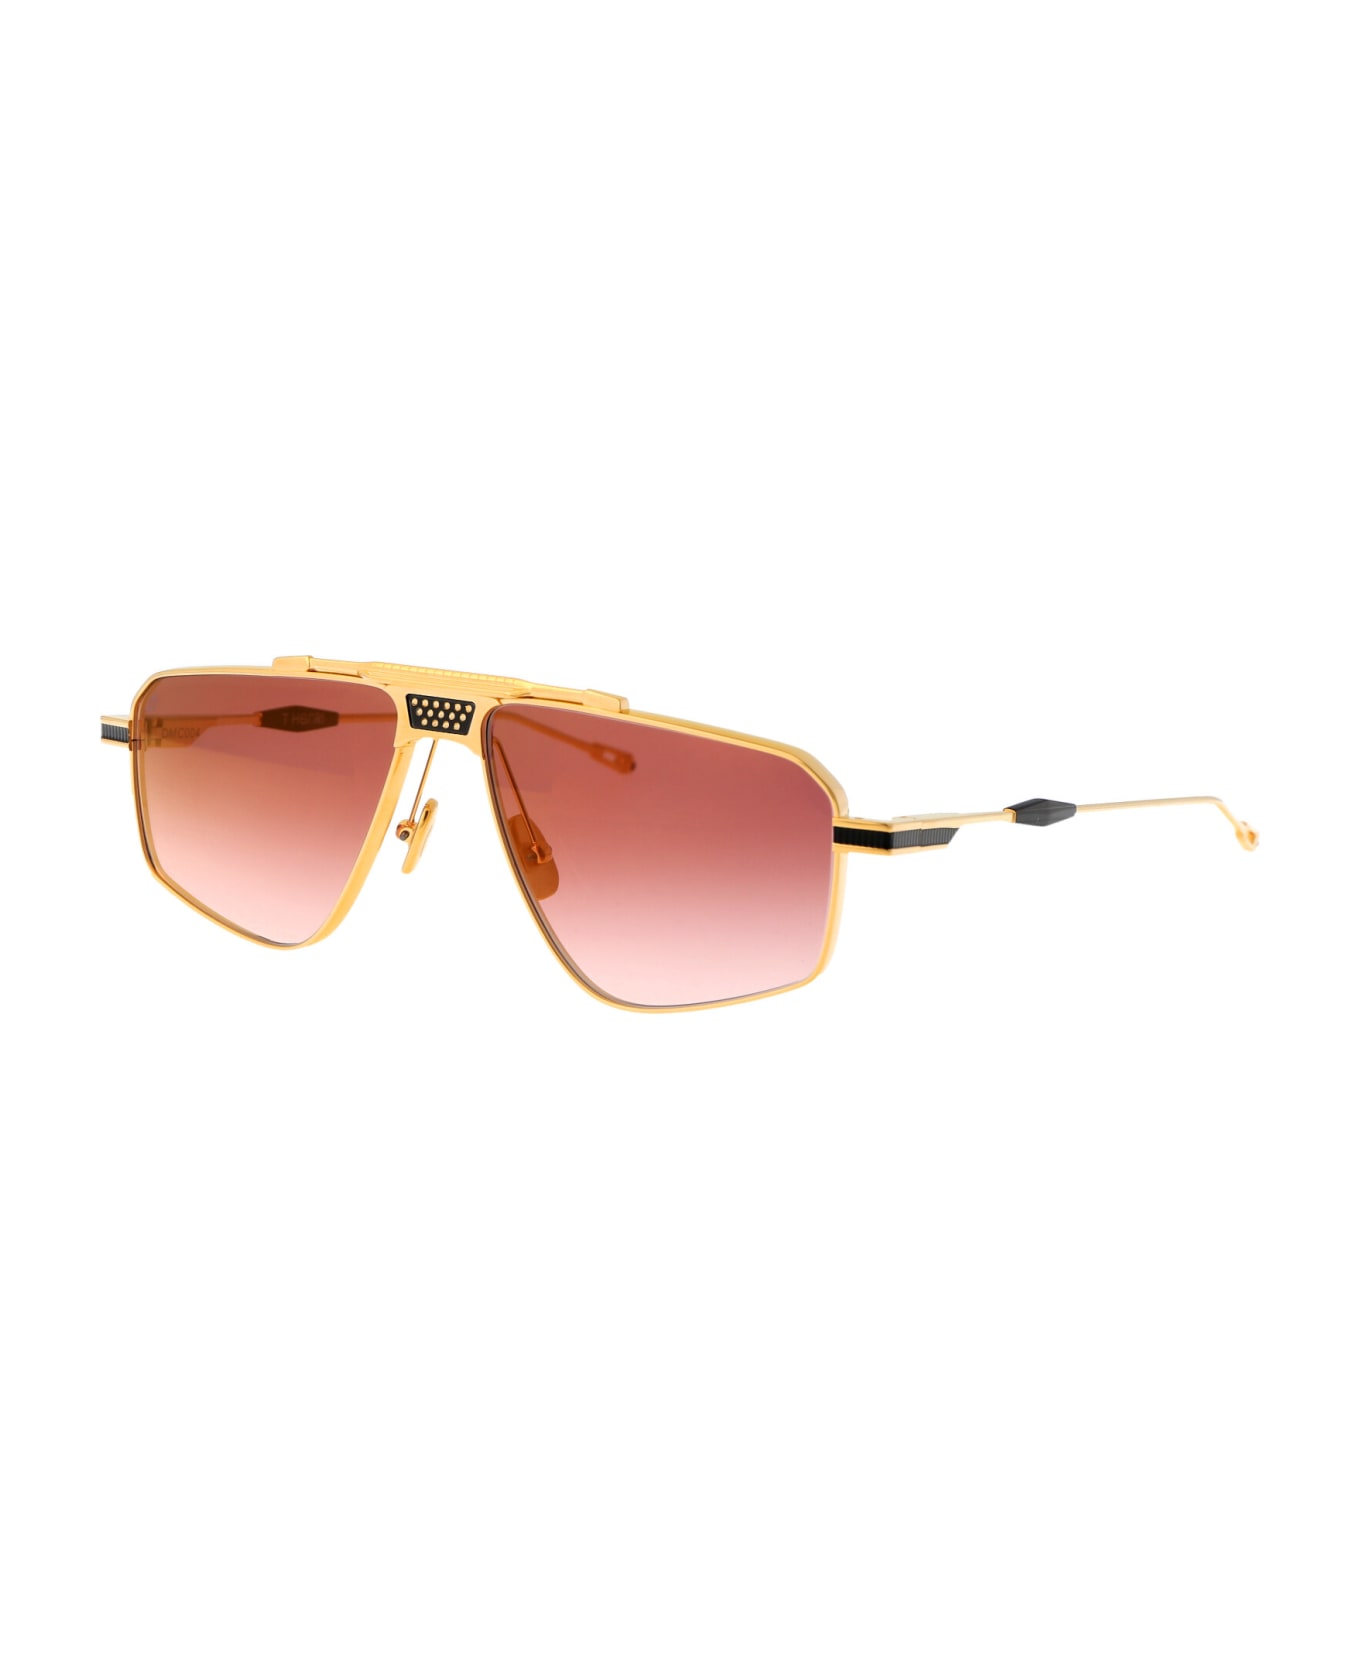 T Henri Drophead Sunglasses - CASINO ROYALE サングラス